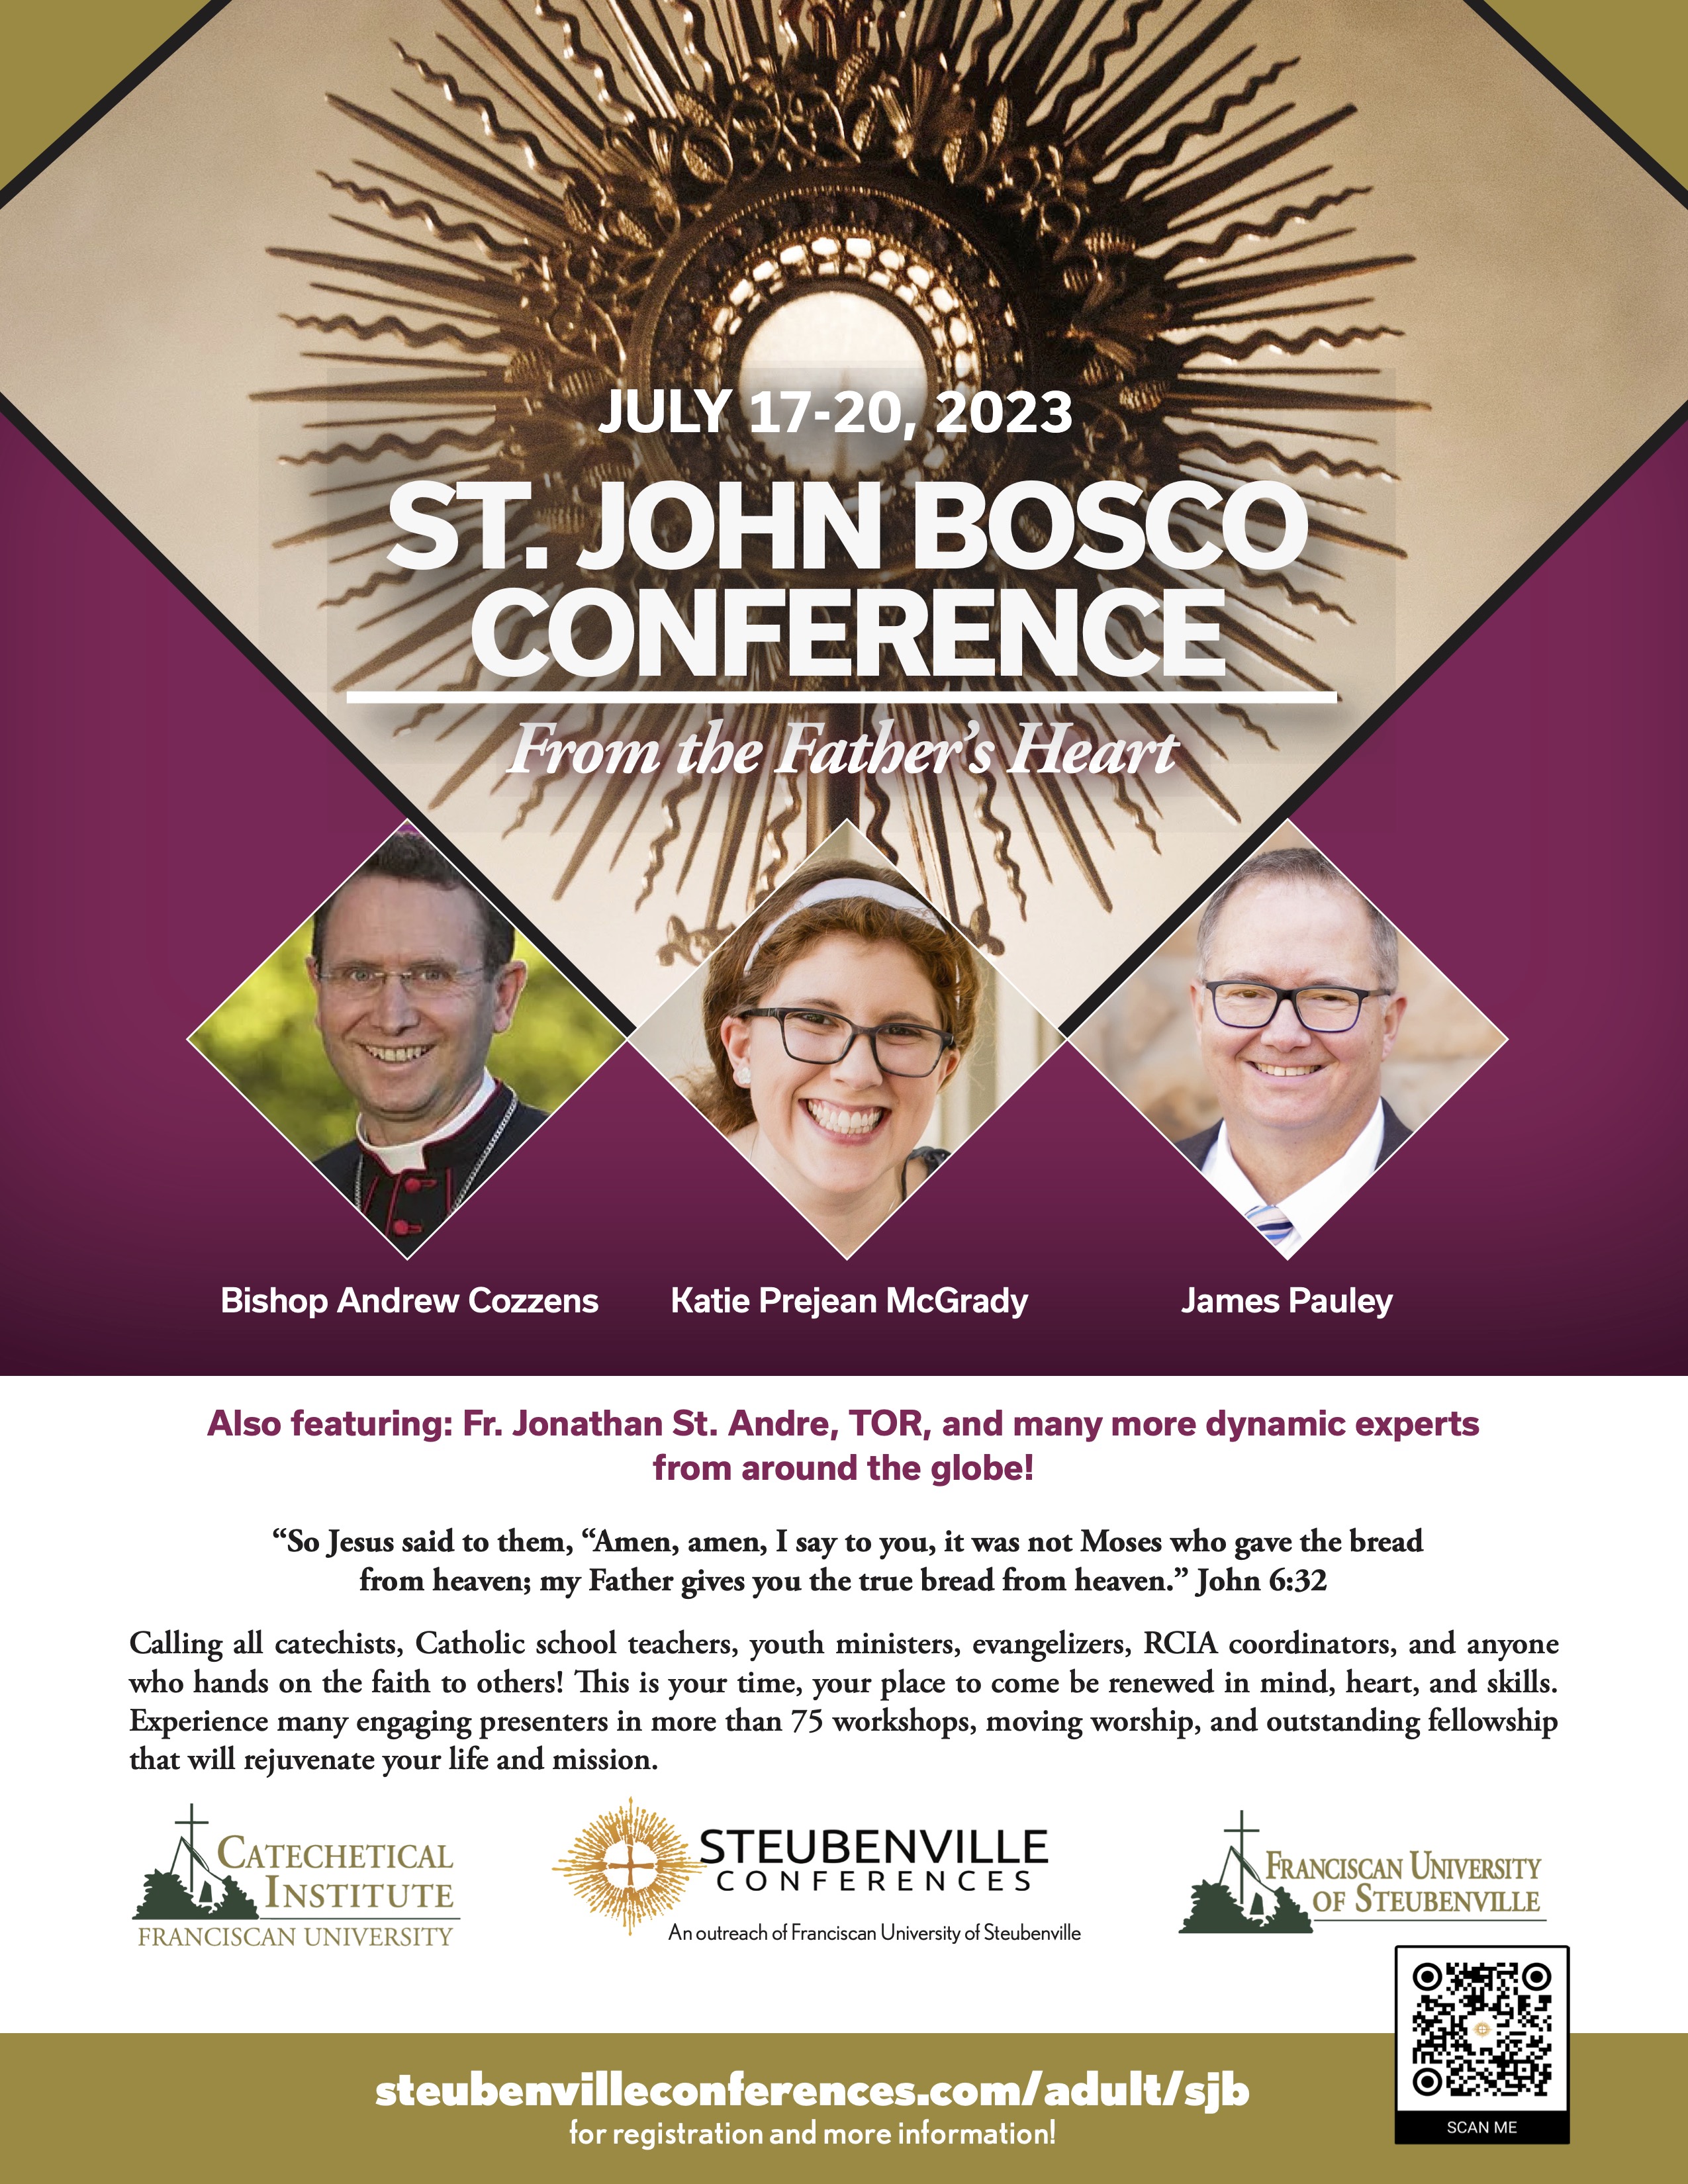 Flyer for the 2023 St. John Bosco Conference.